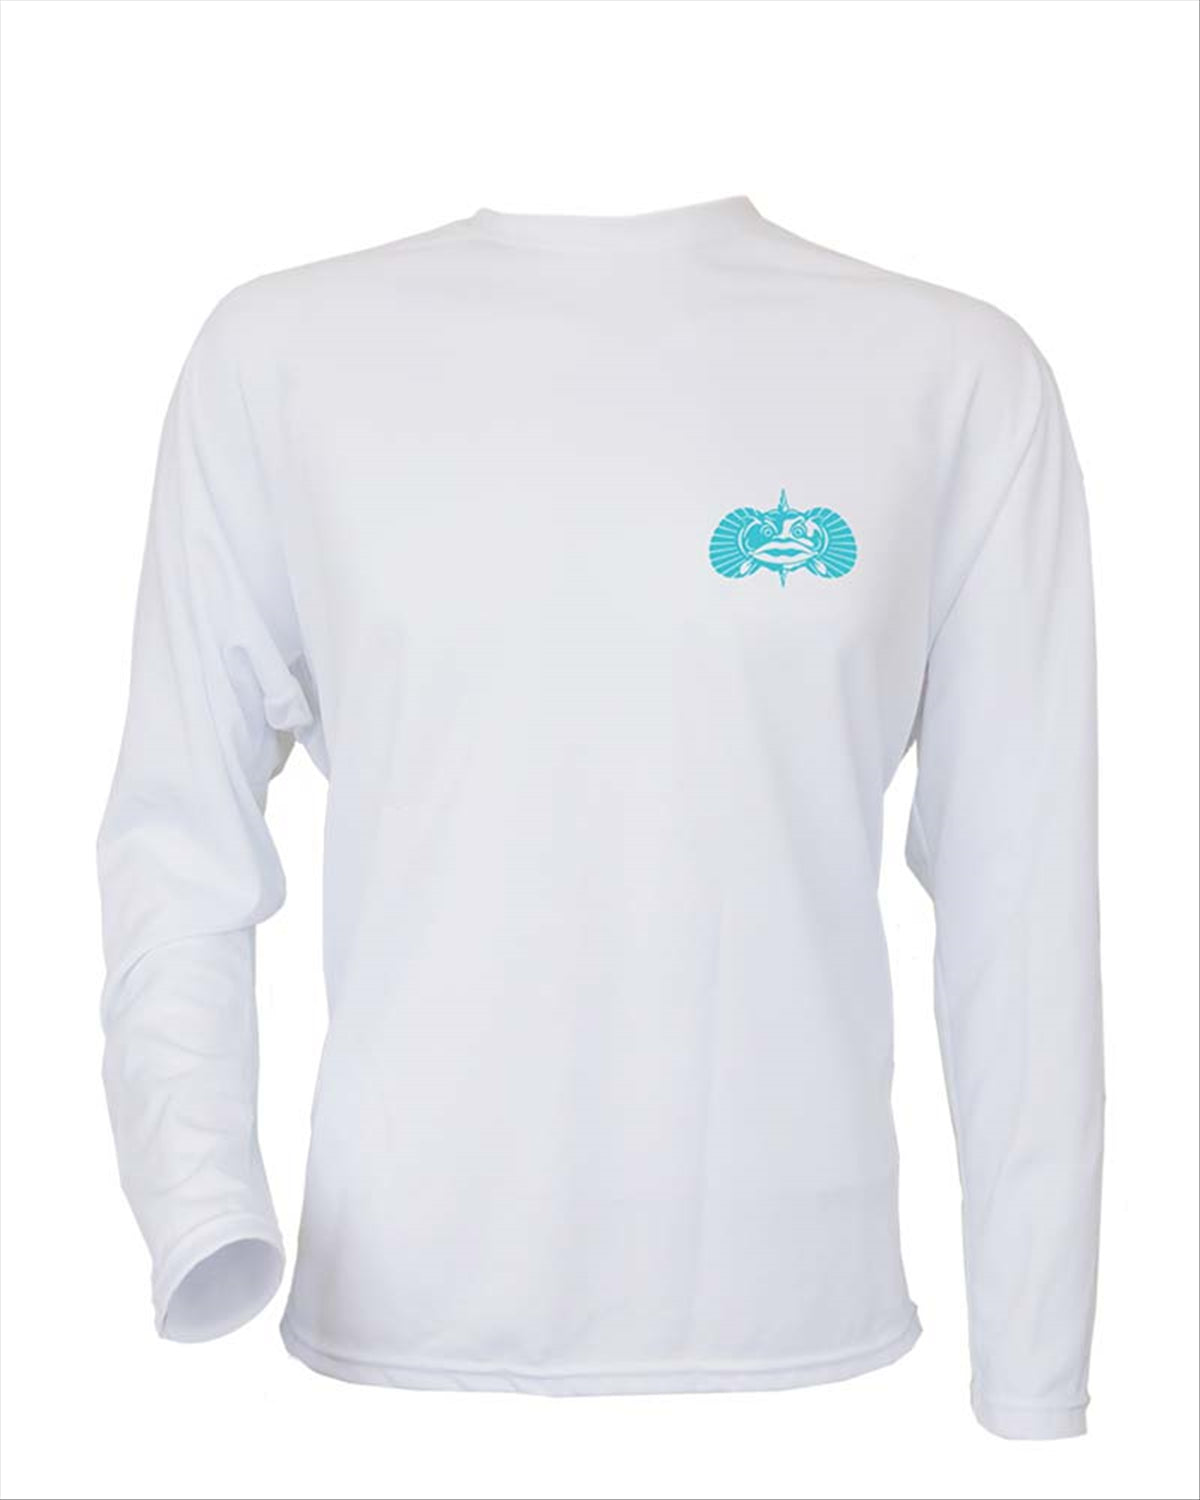 TOADFISH Toadfish Eco-Active Long Sleeve Shirt